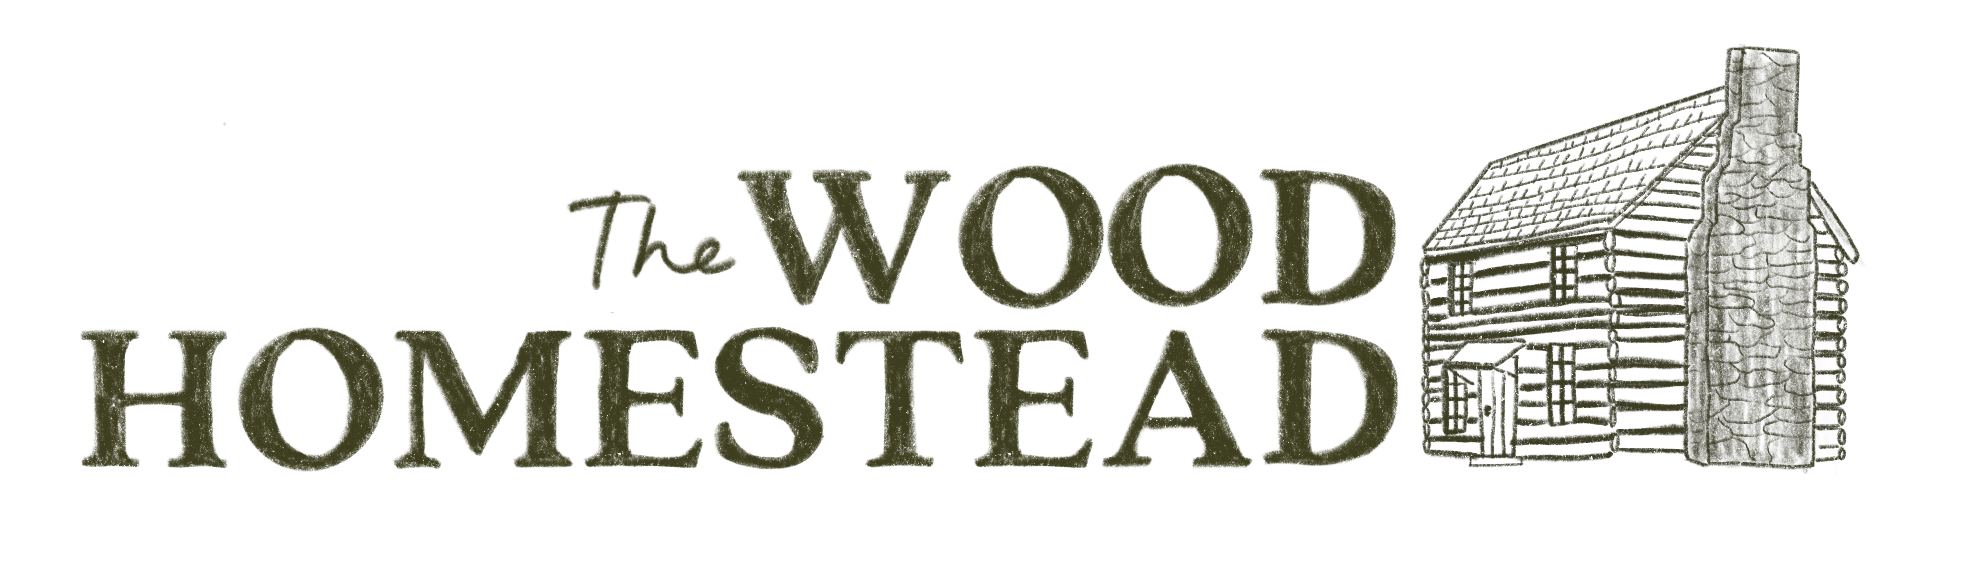 The Wood Homestead